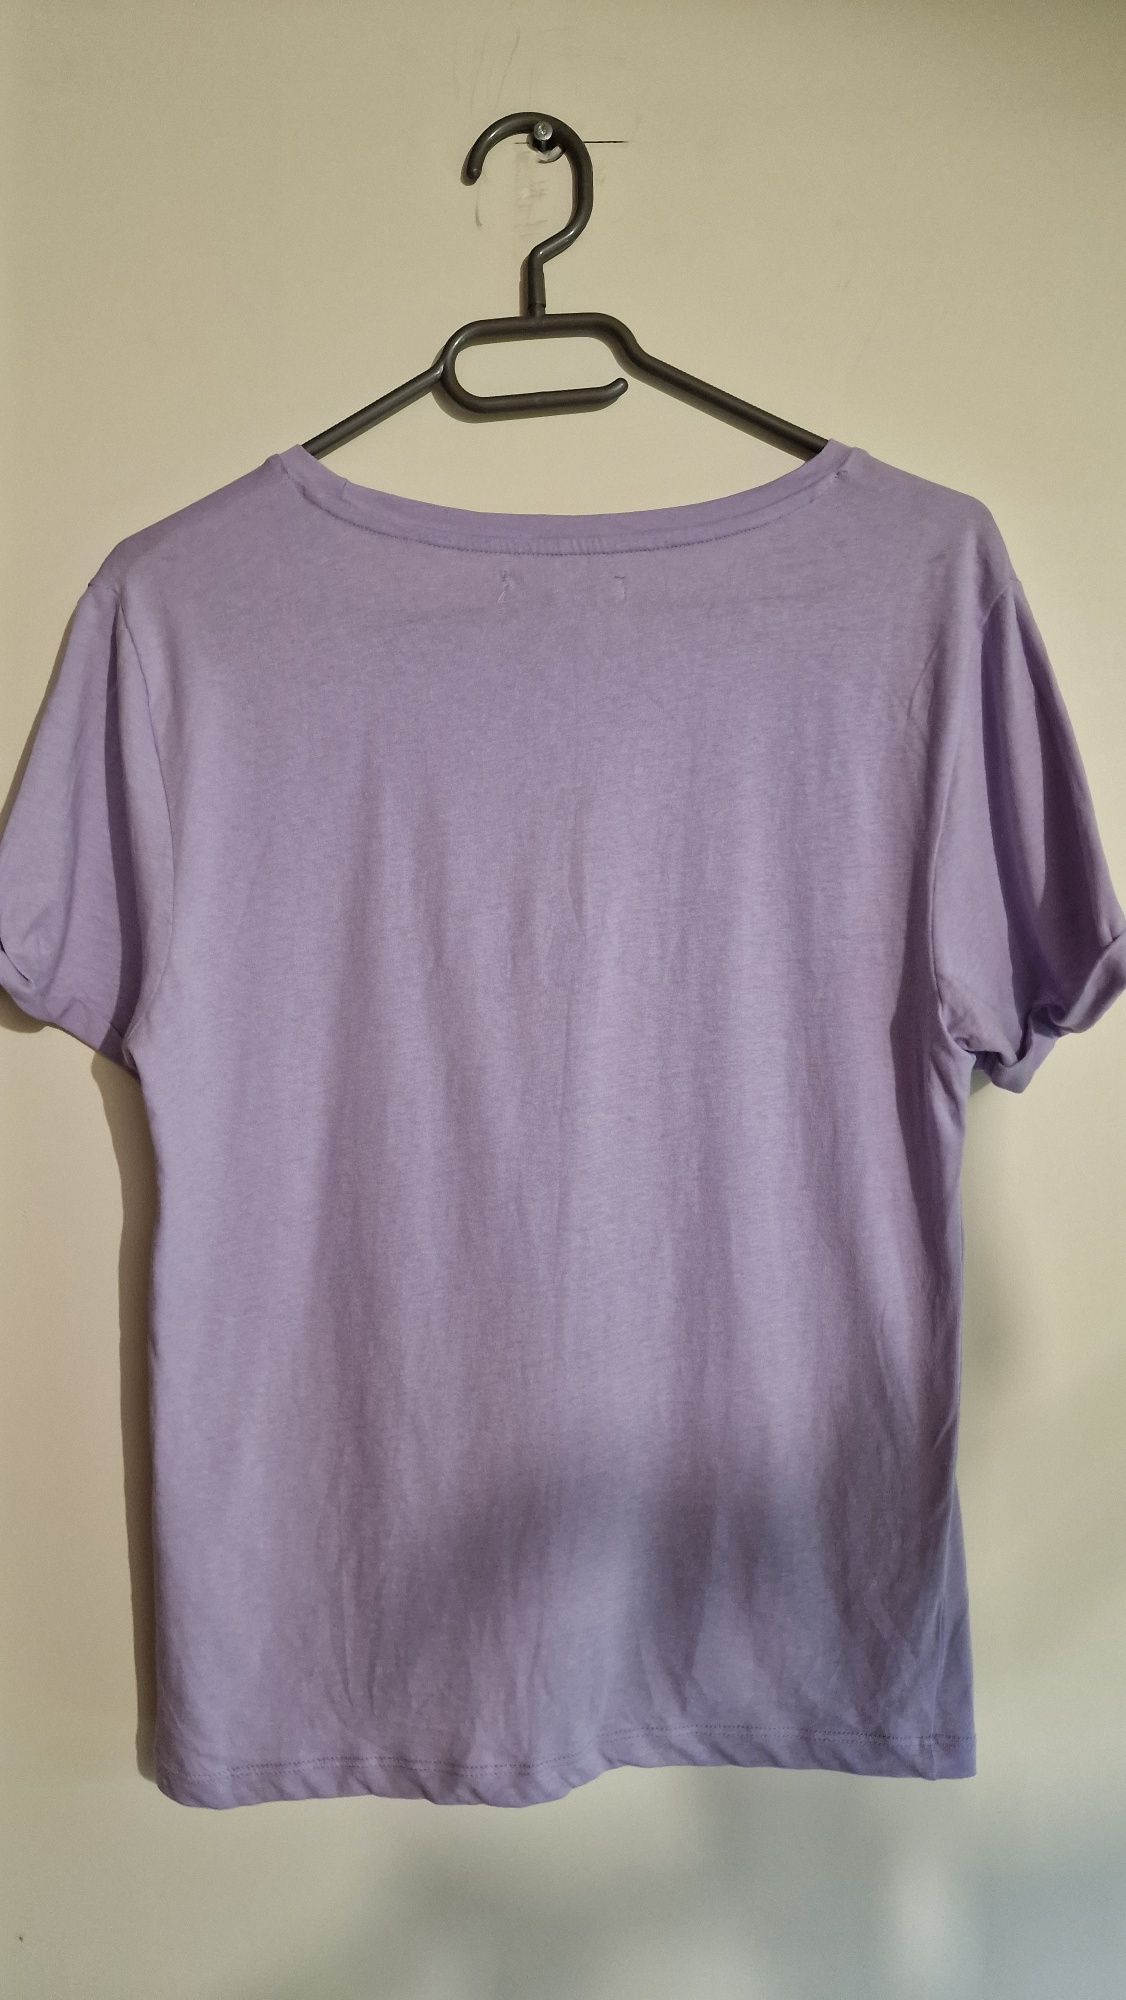 T-shirt koszulka damska House bawełna organiczna 36 S pastelowa